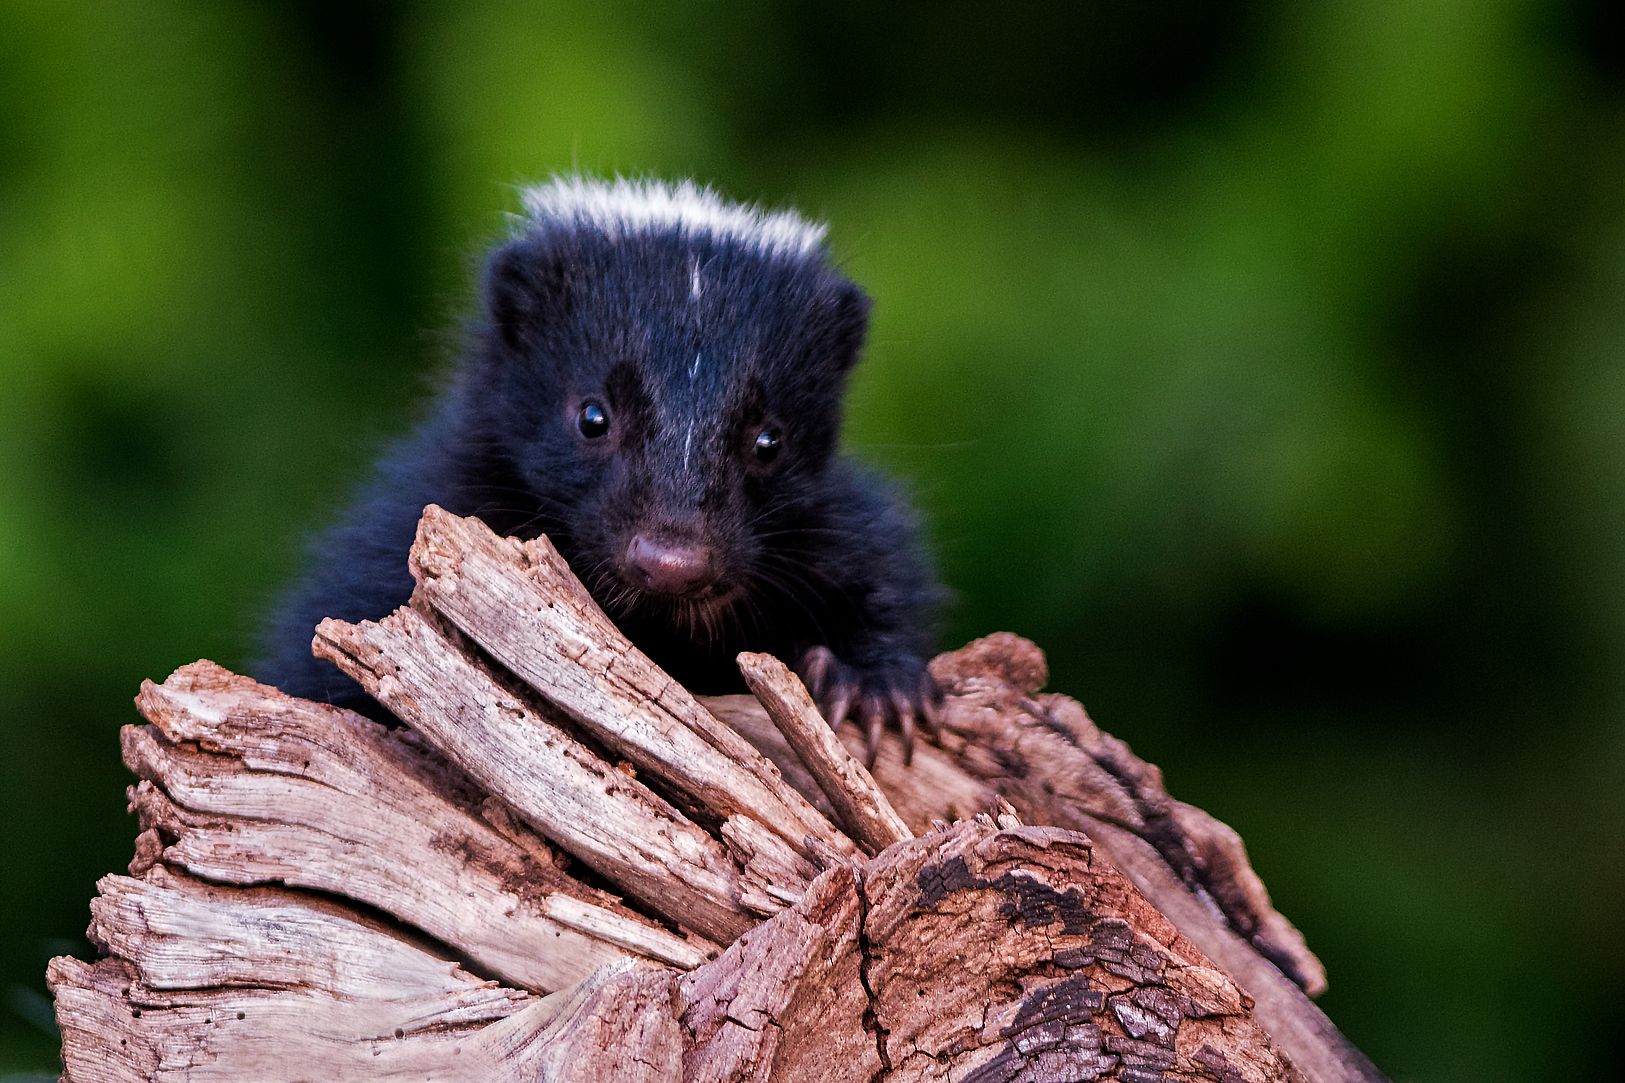 skunk peeking over a log